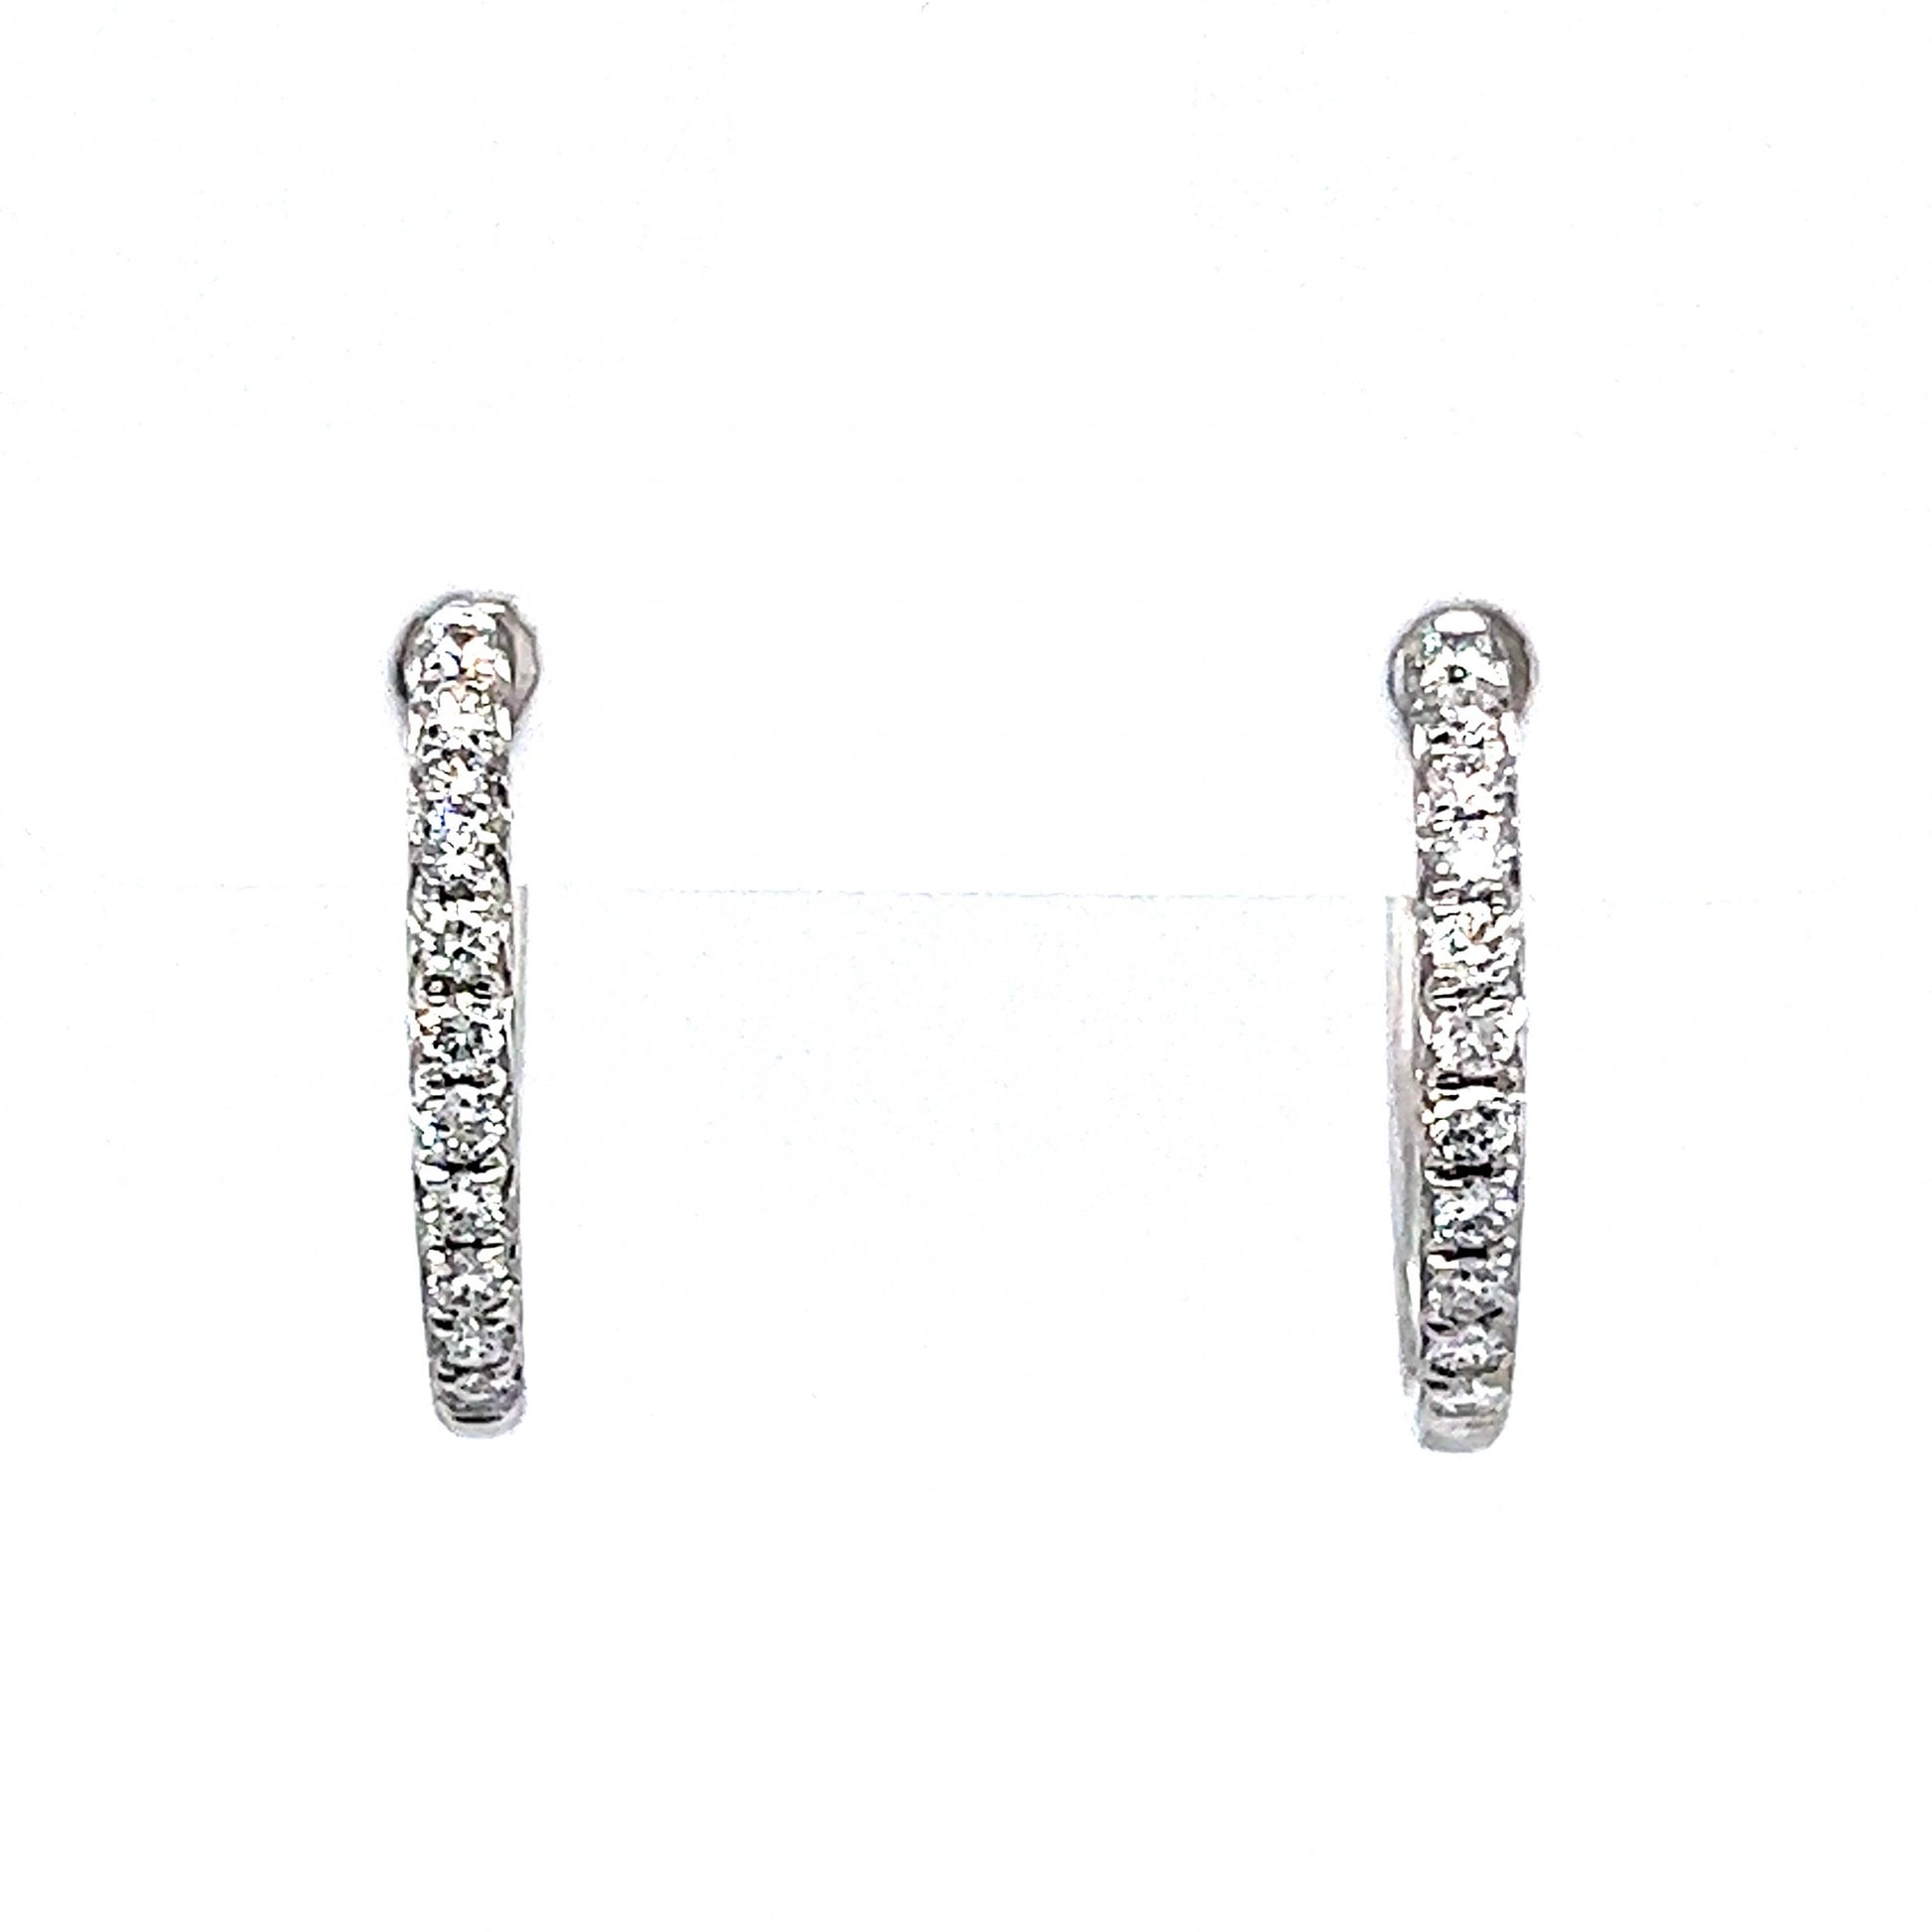 15mm Round Diamond Hoop Earrings in 14k White Gold